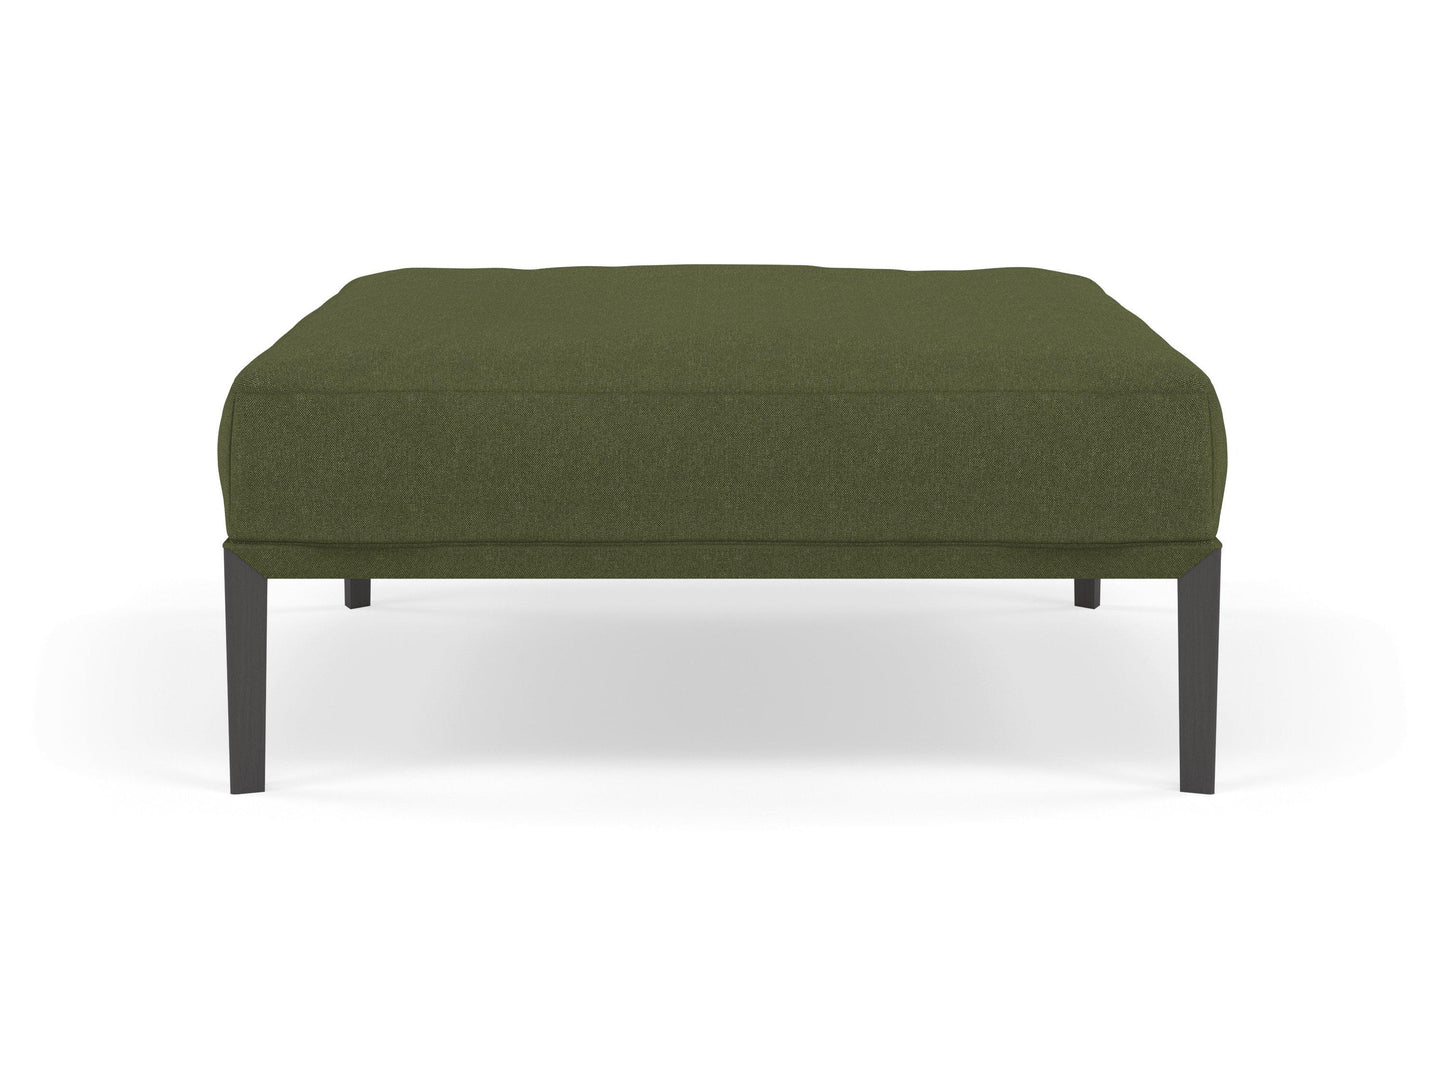 Modern Pouffe Footstools Ottomans Square Seat 103x103cm in Seaweed Green Fabric-Distinct Designs (London) Ltd